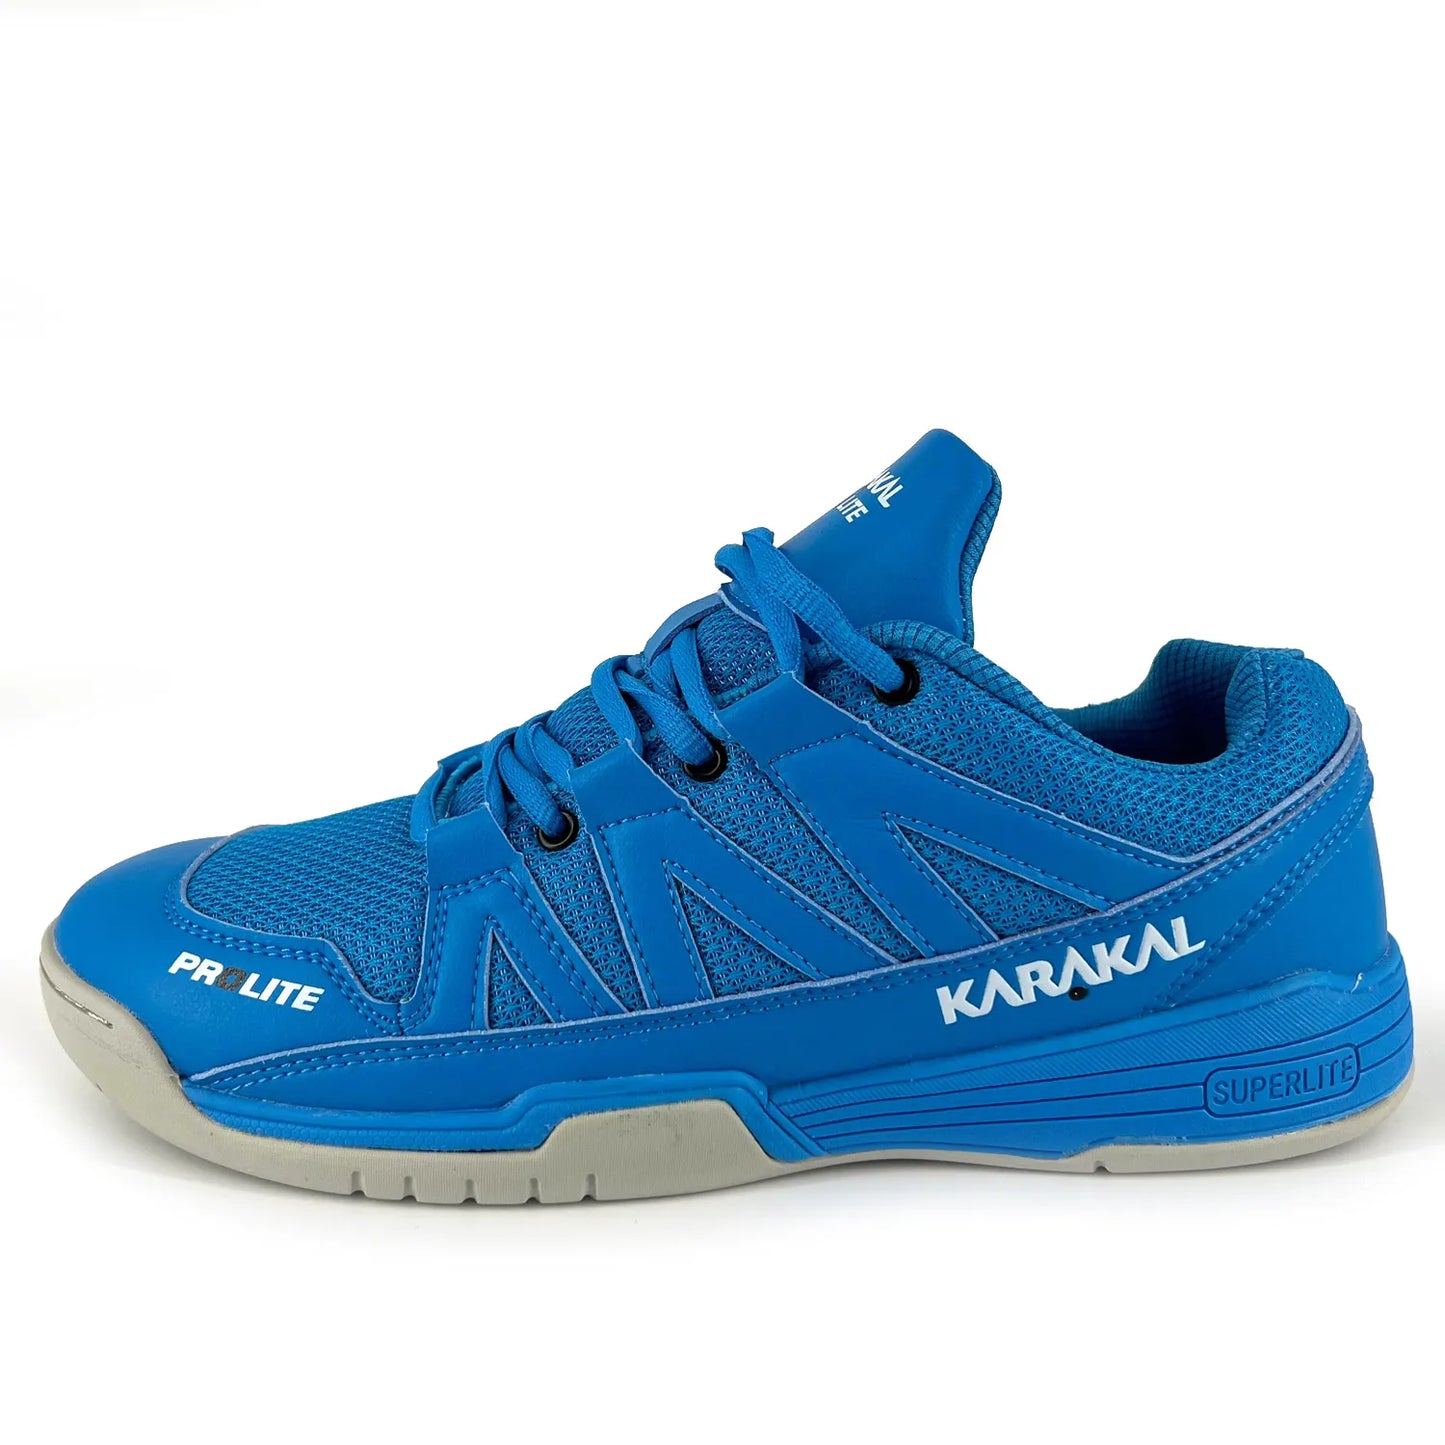 Karakal KF ProLite Court Shoe in Blue